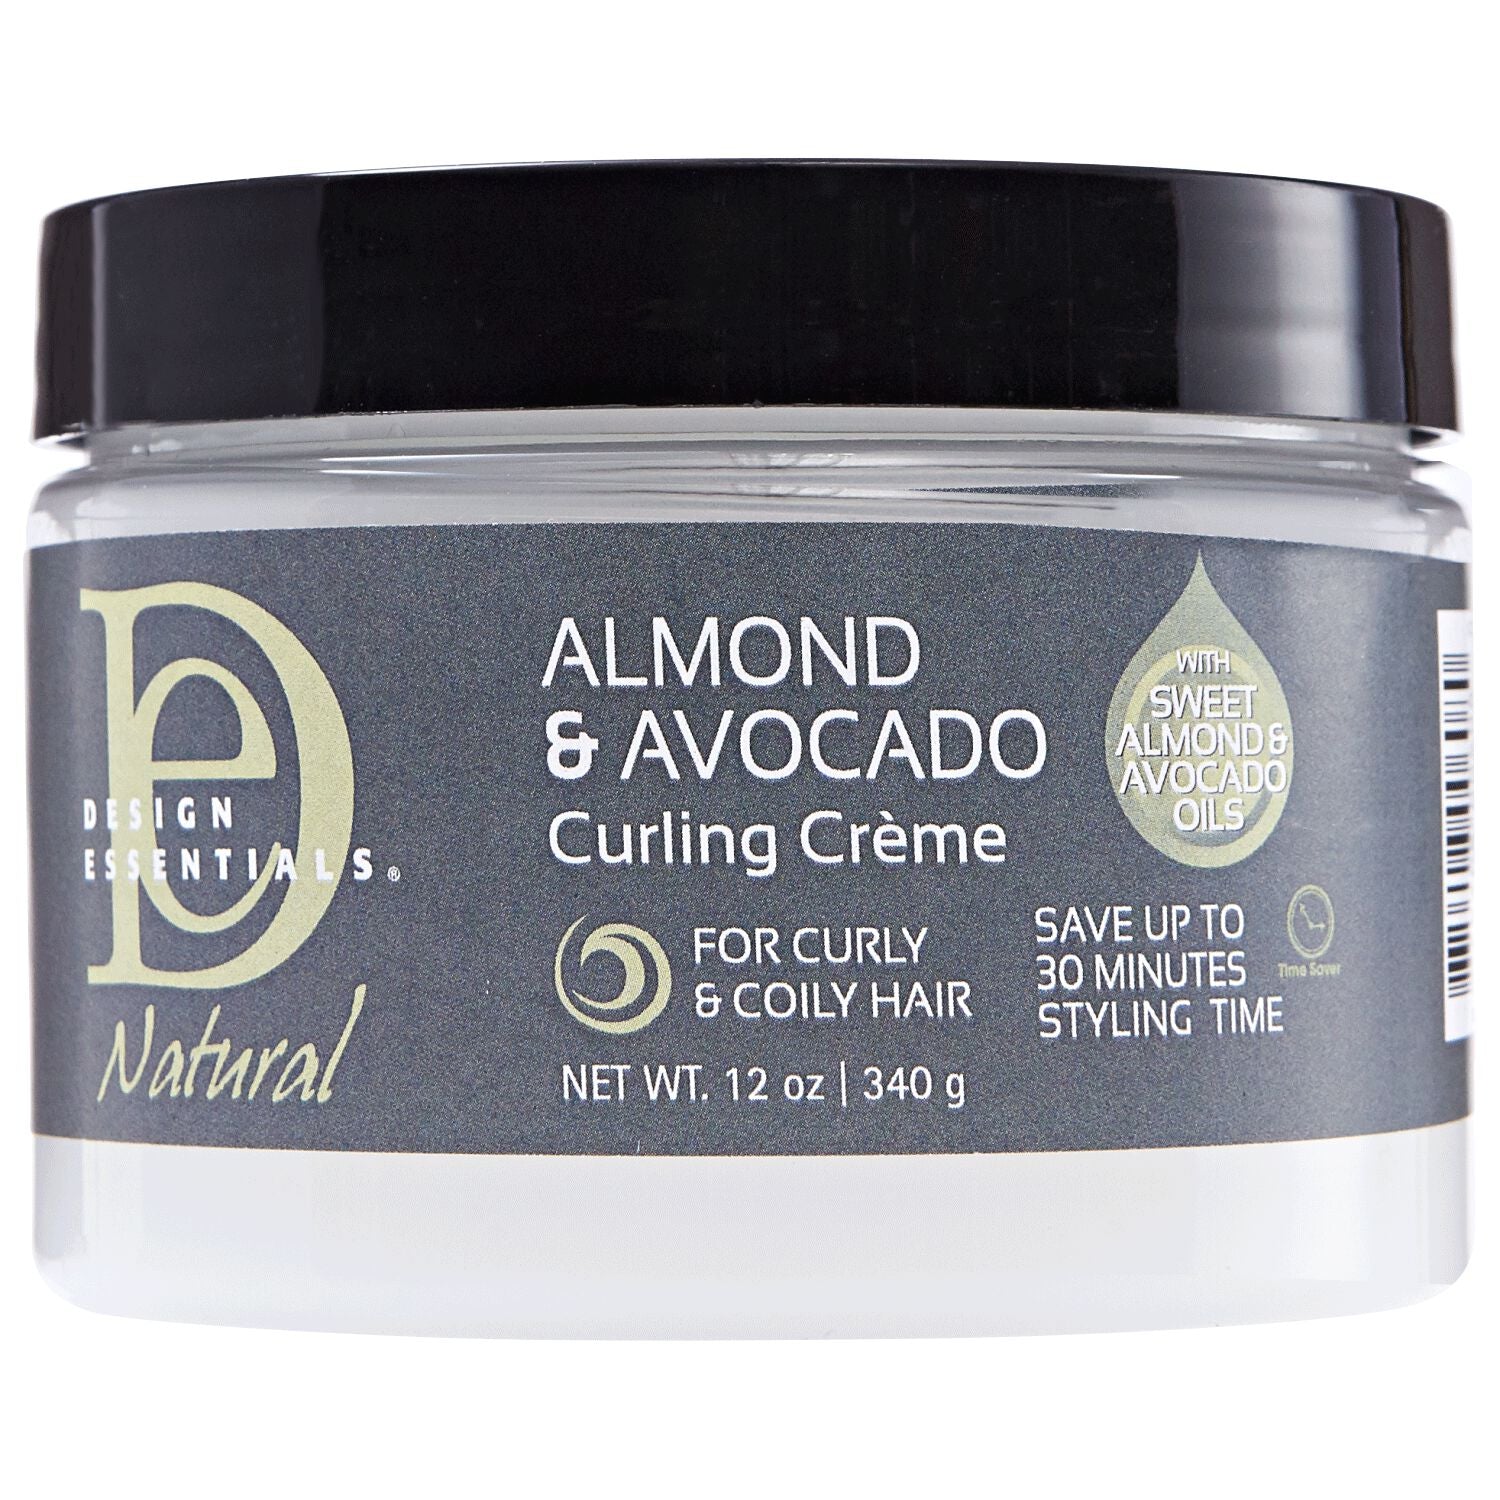 DESIGN ESSENTIALS Natural Almond & Avocado Curling Creme